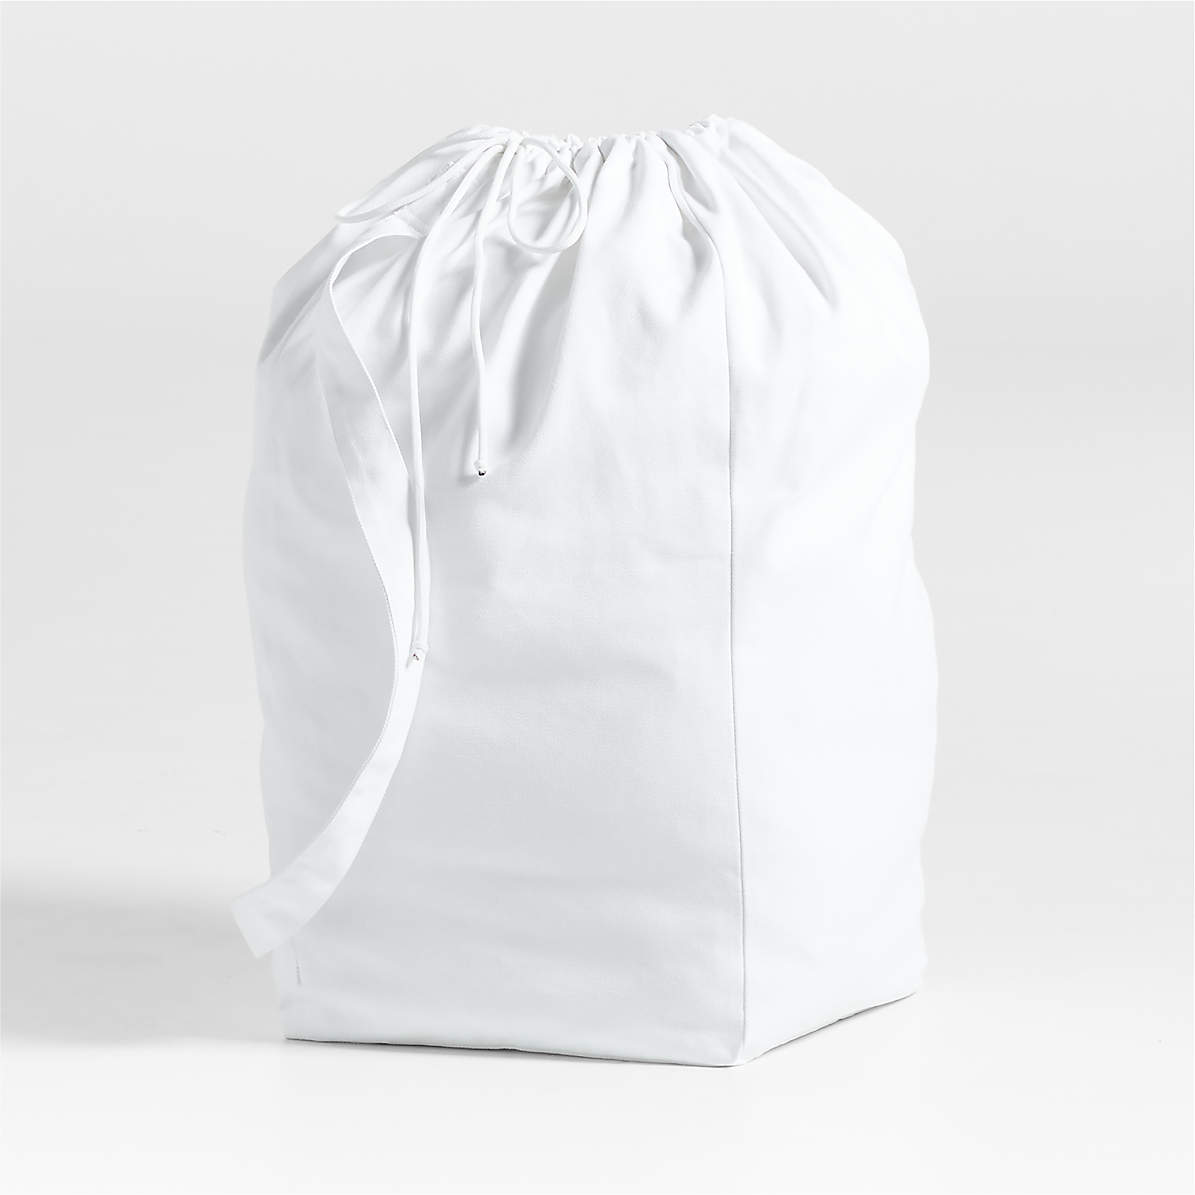 Cotton Laundry Bag, Custom Laundry Bags